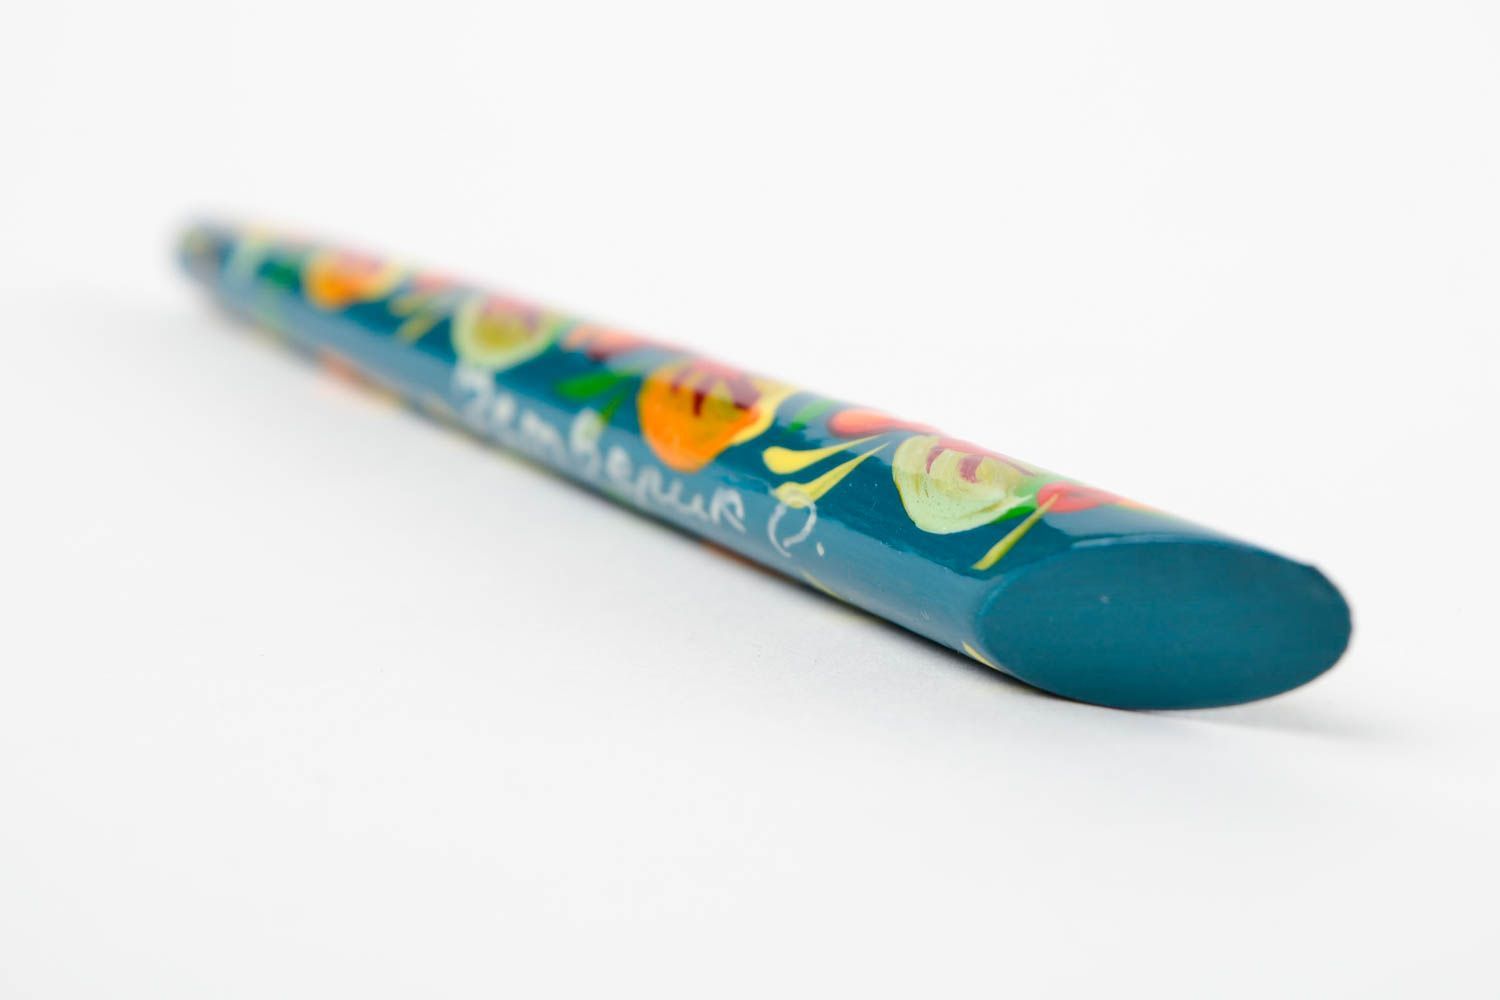 Handmade pen designer pen for school unusual pen wooden pen gift ideas photo 5